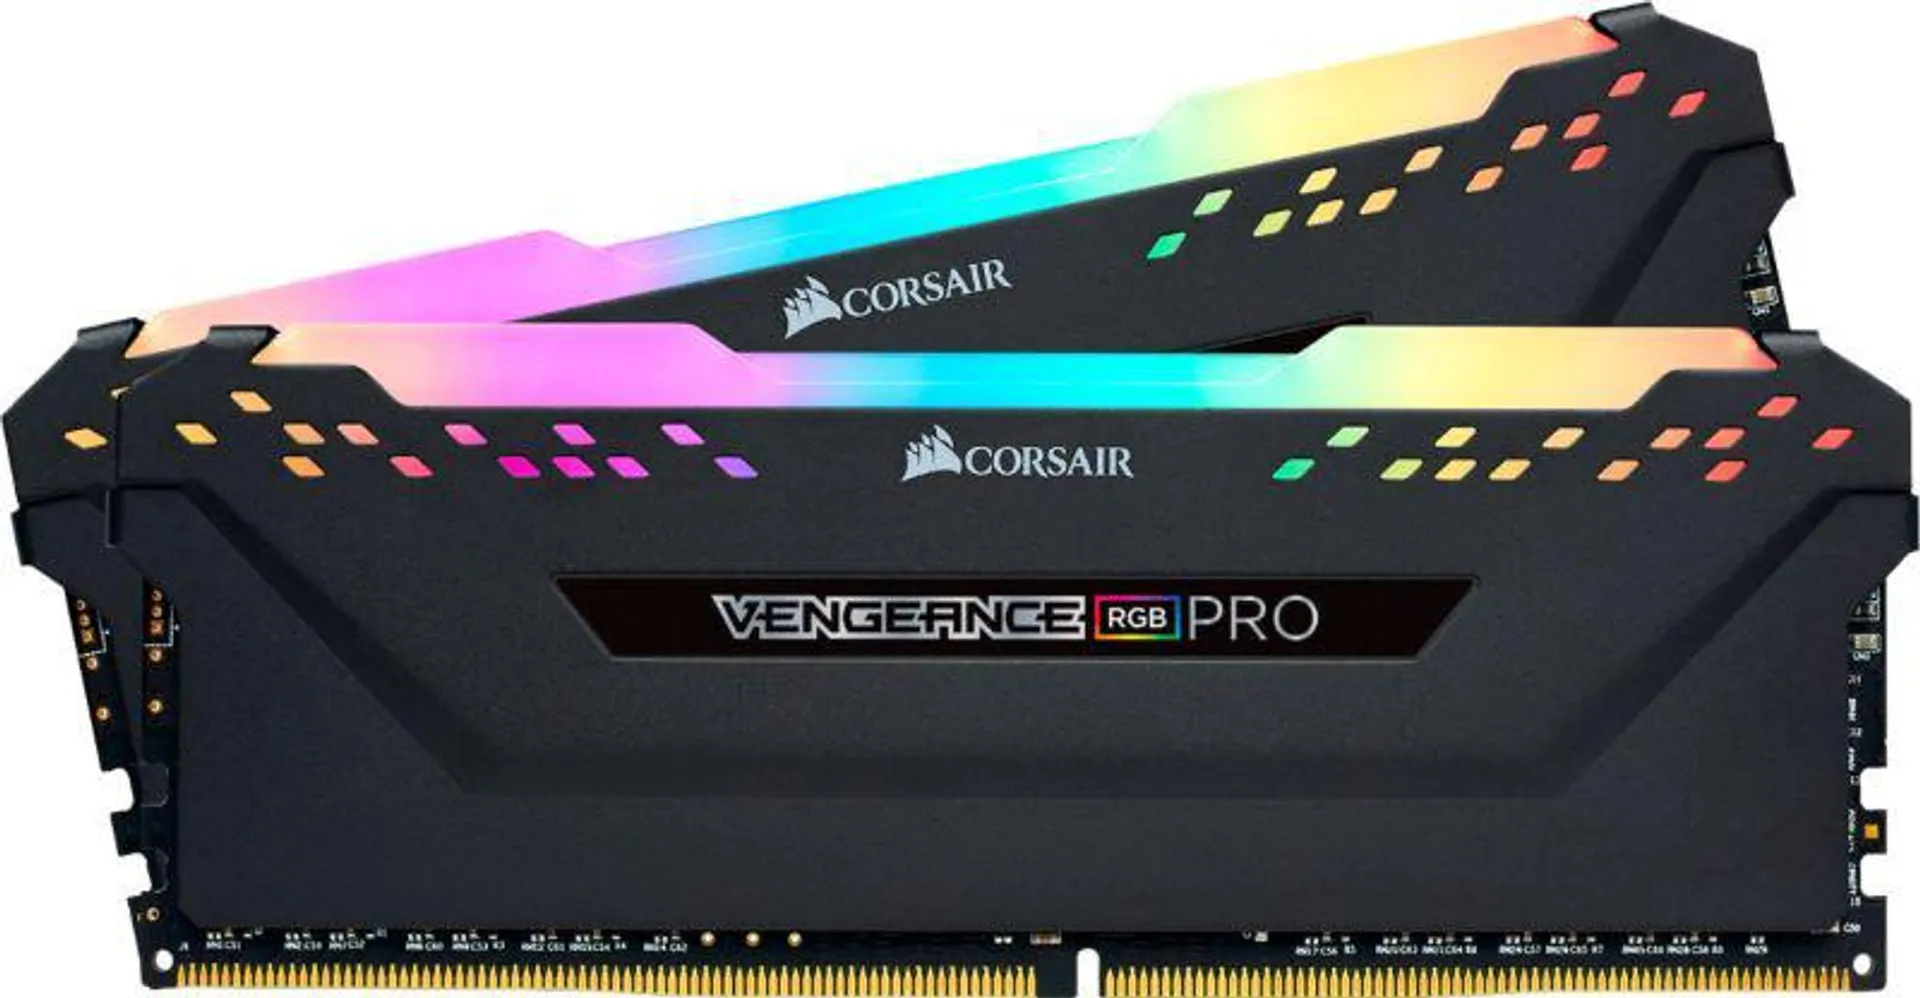 CORSAIR VENGEANCE RGB PRO 32GB DDR4 3200MHz Desktop Memory for Gaming